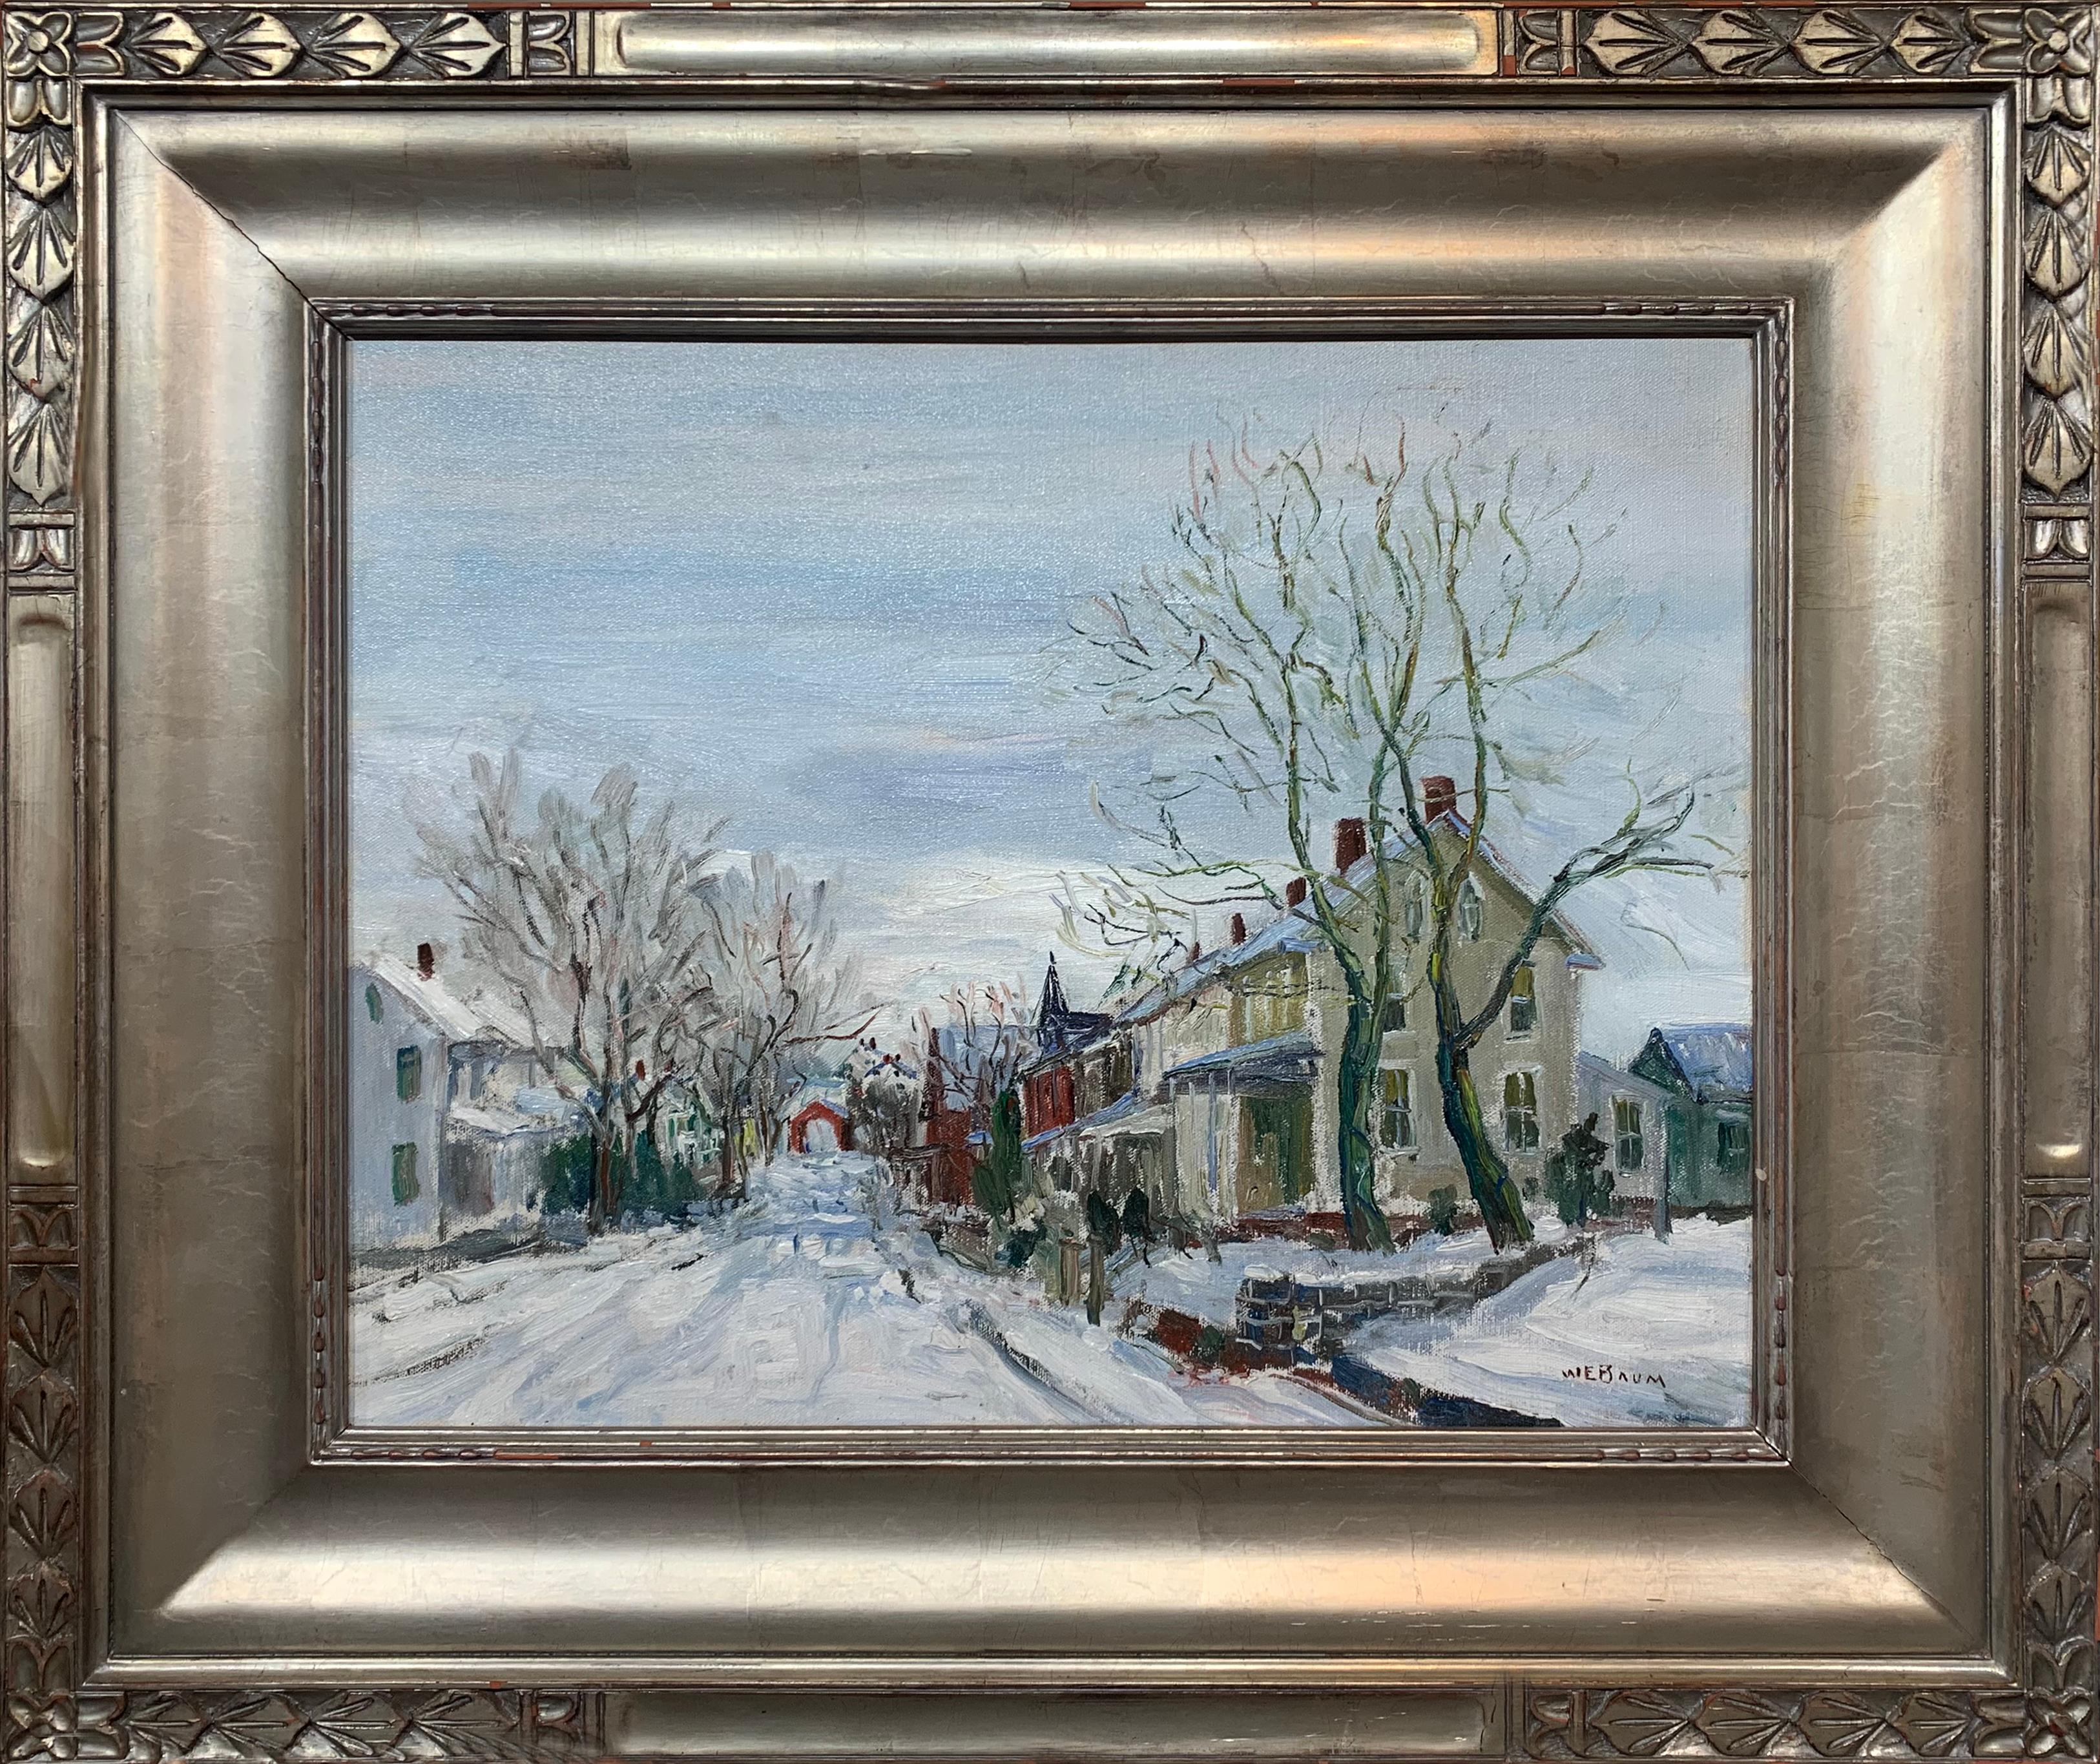 South Perkasie PA, Regional Pennsylvania Impressionist Winter Snow Landscape - Painting by Walter Emerson Baum